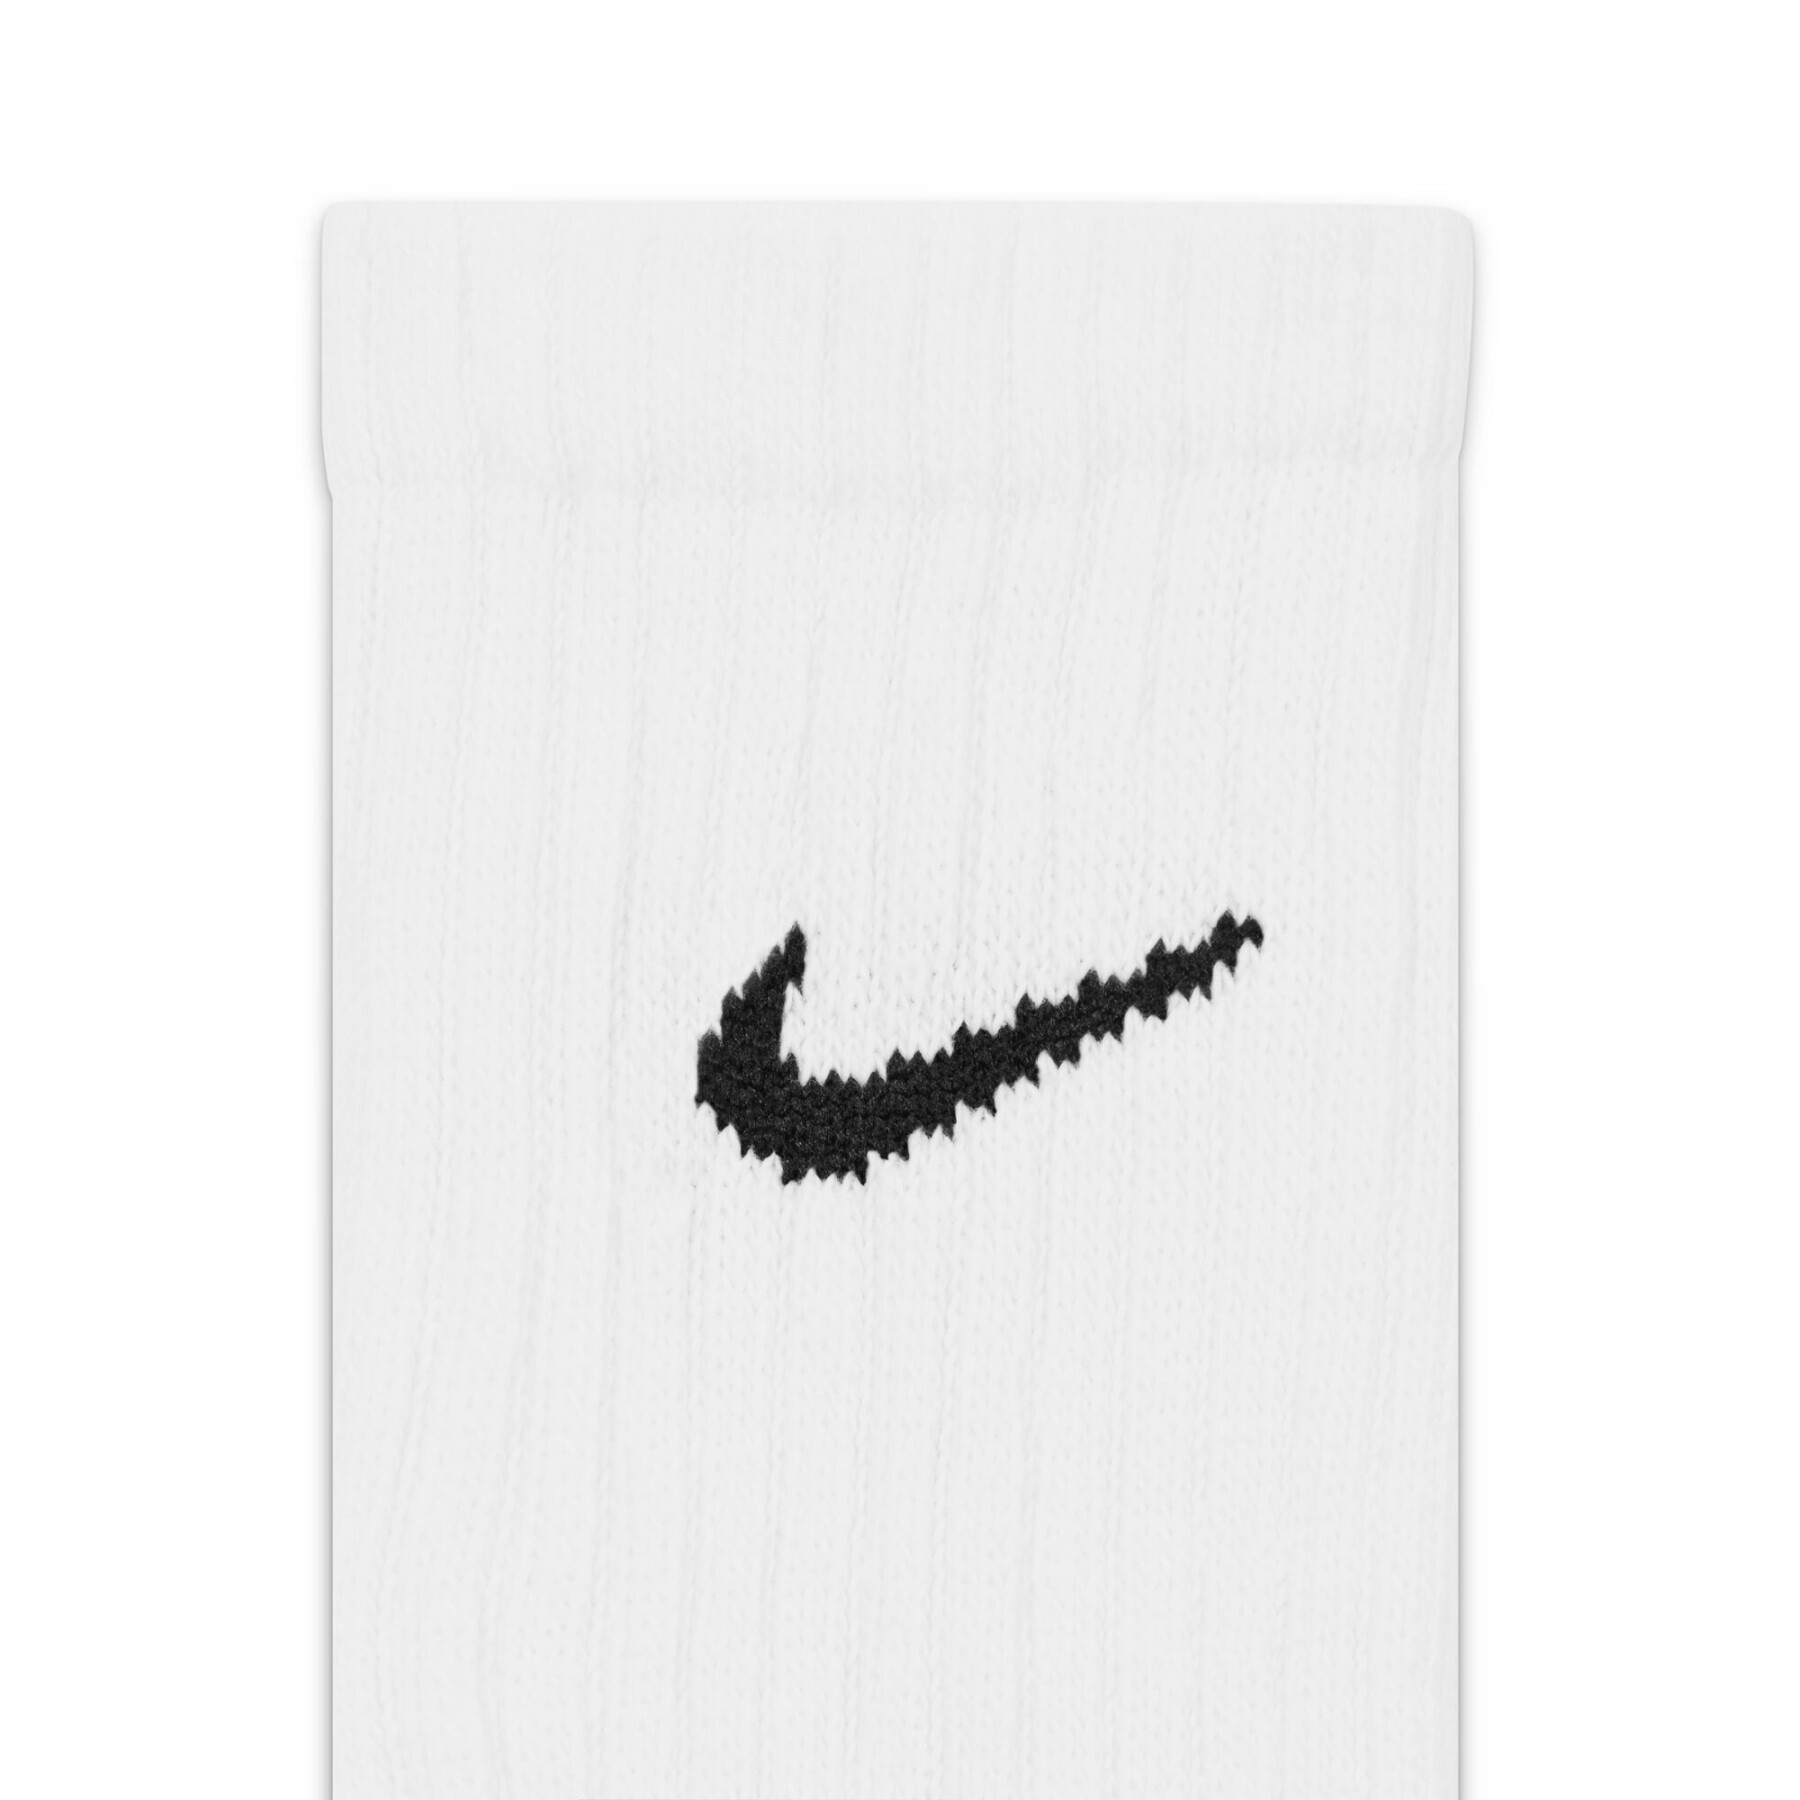 Calcetines Nike Cushioned (x6)